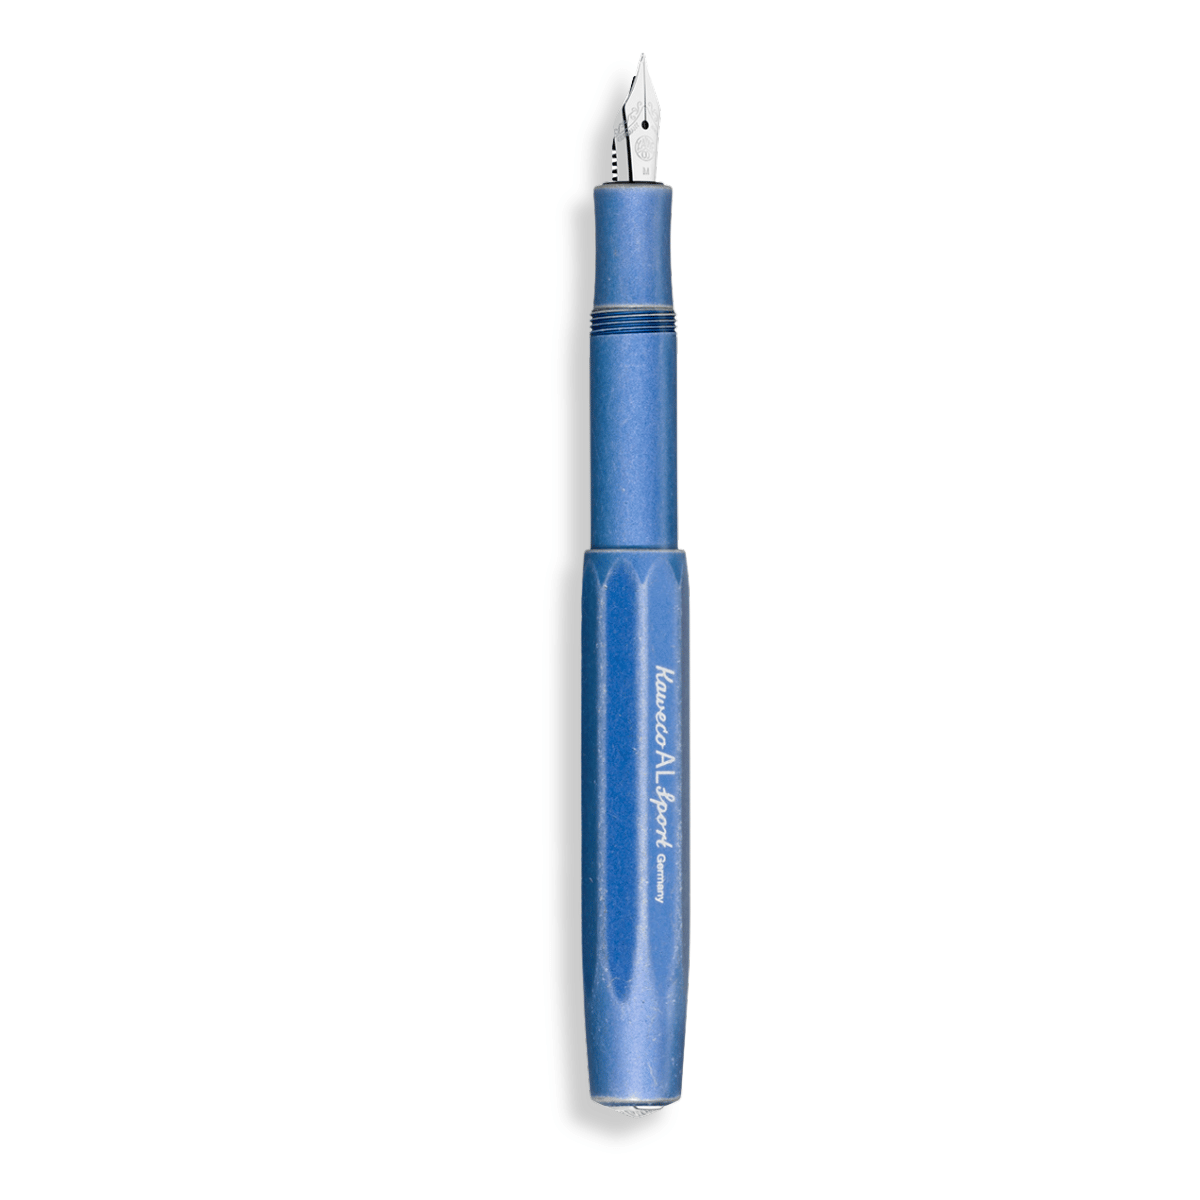 Kaweco Al Sport fountain pen, stone washed blue